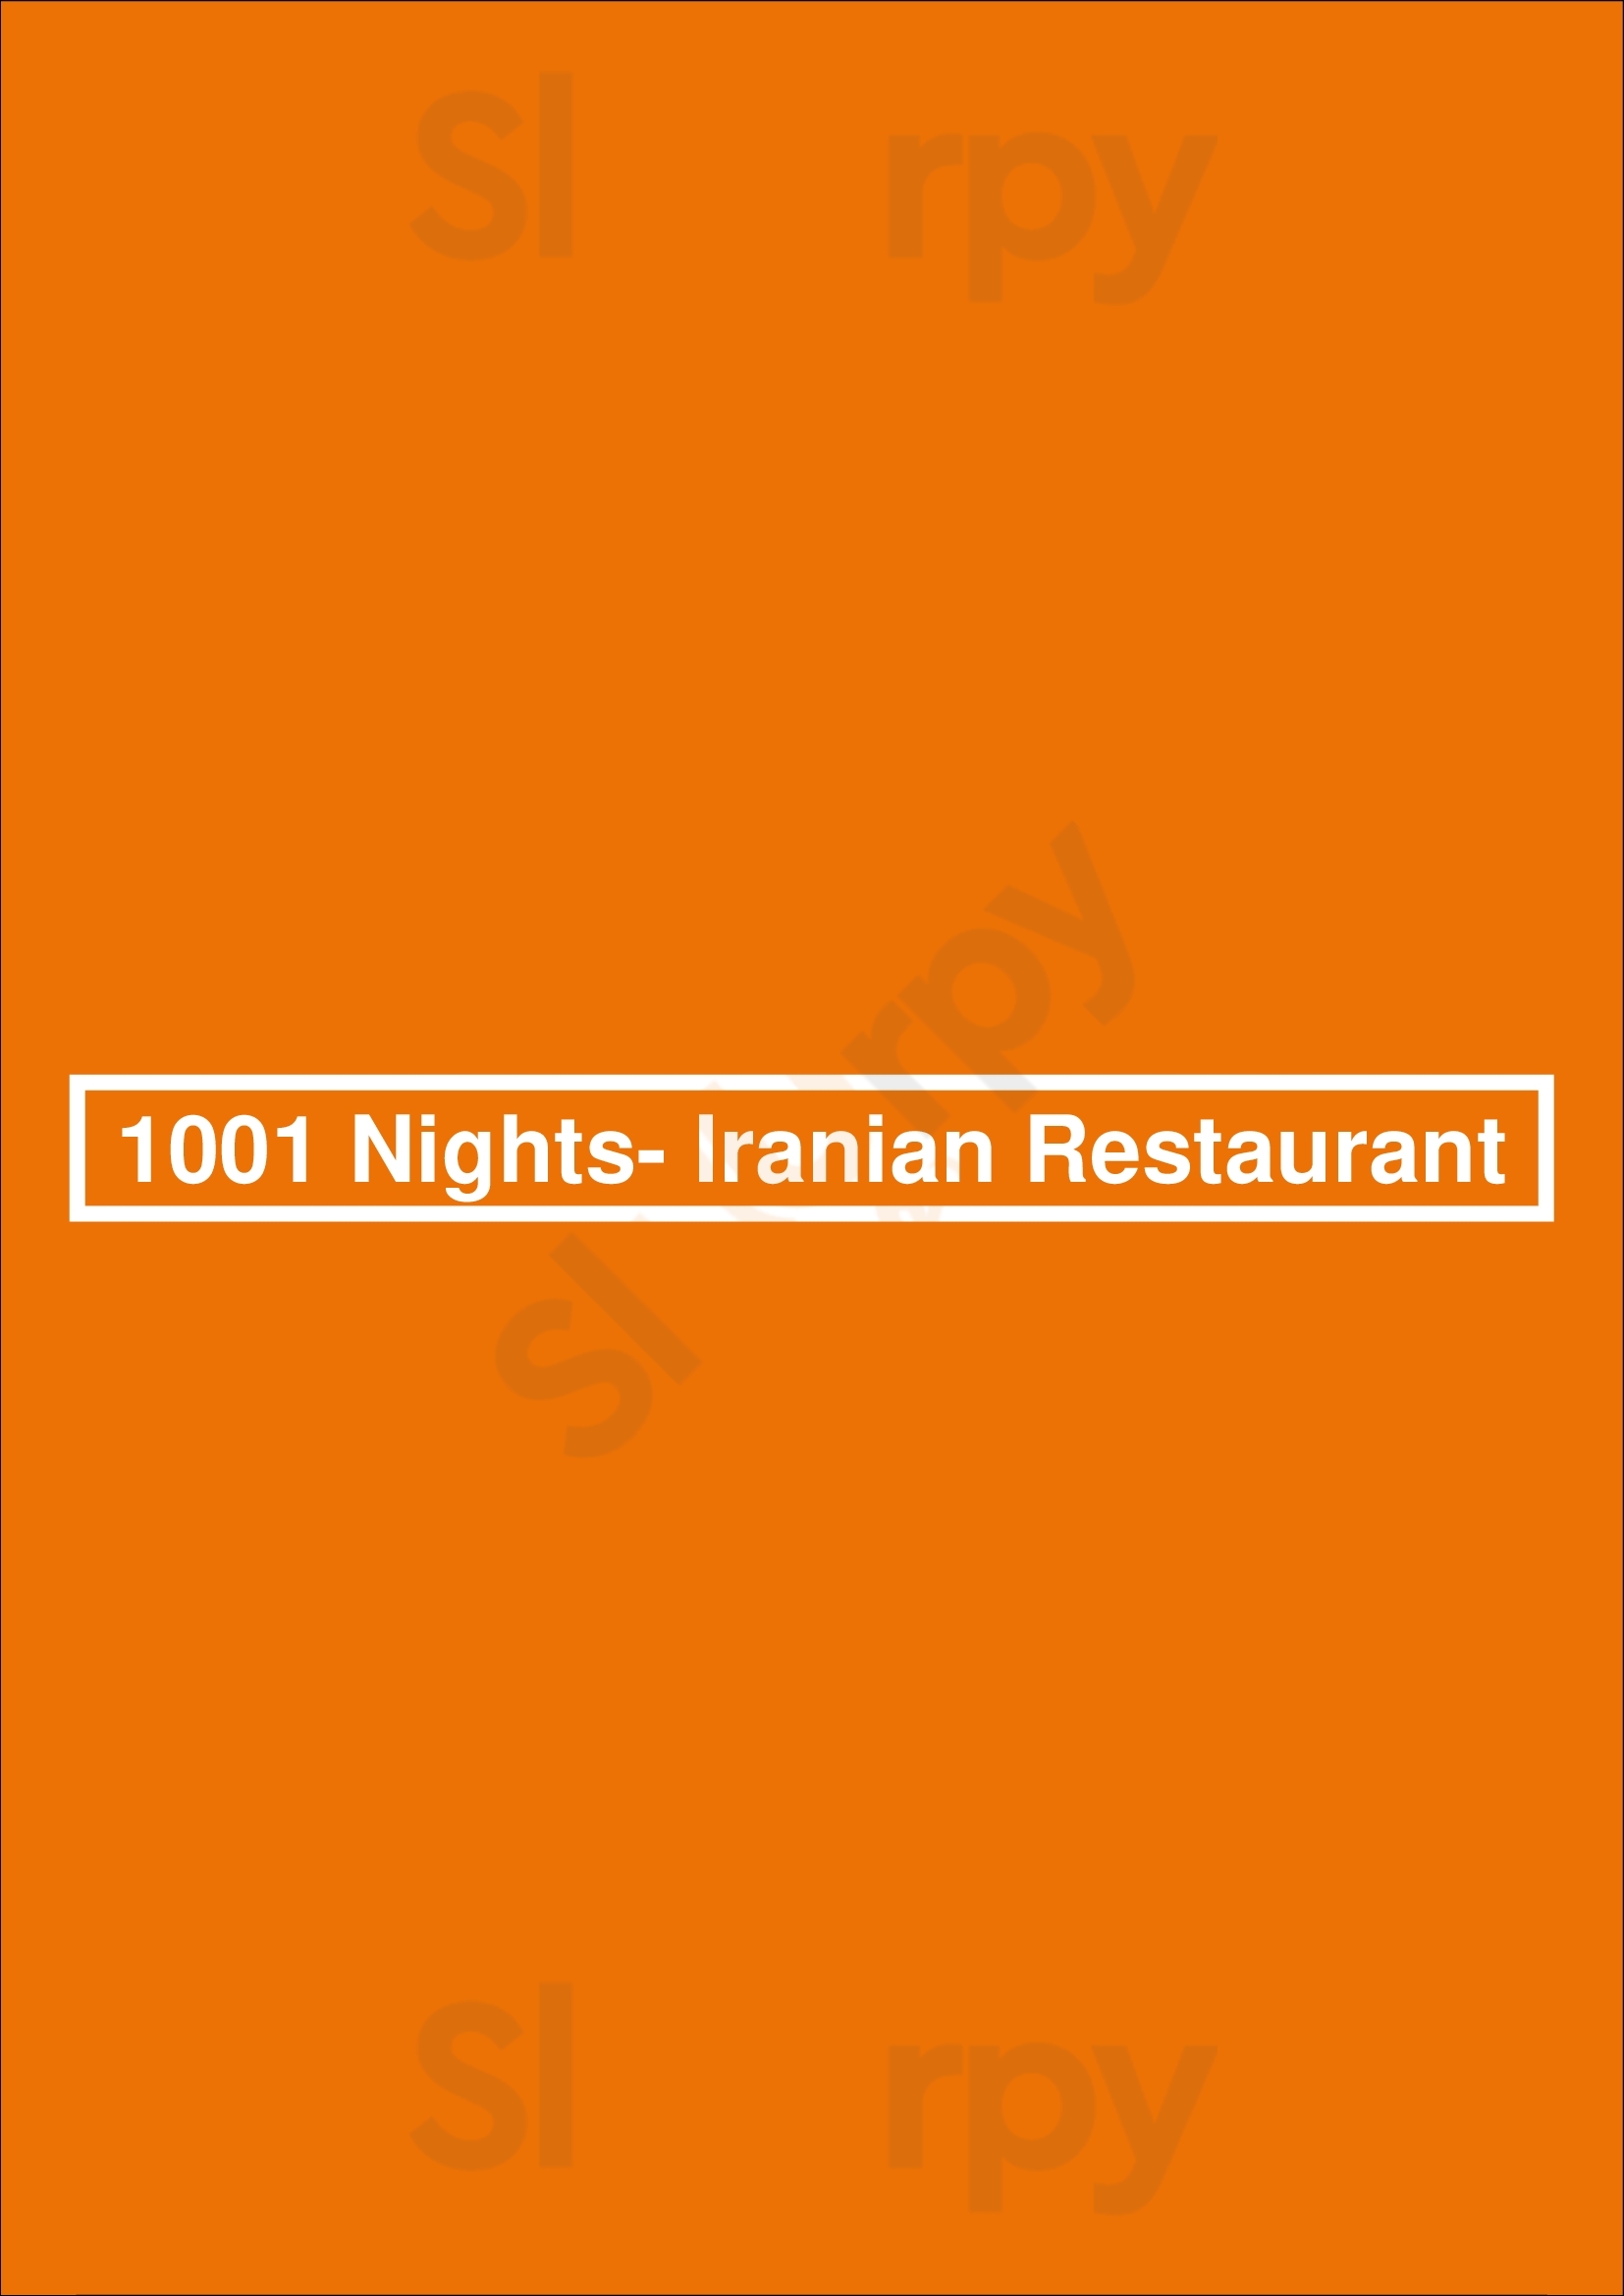 1001 Nights Restaurante Iraniano Lisboa Menu - 1